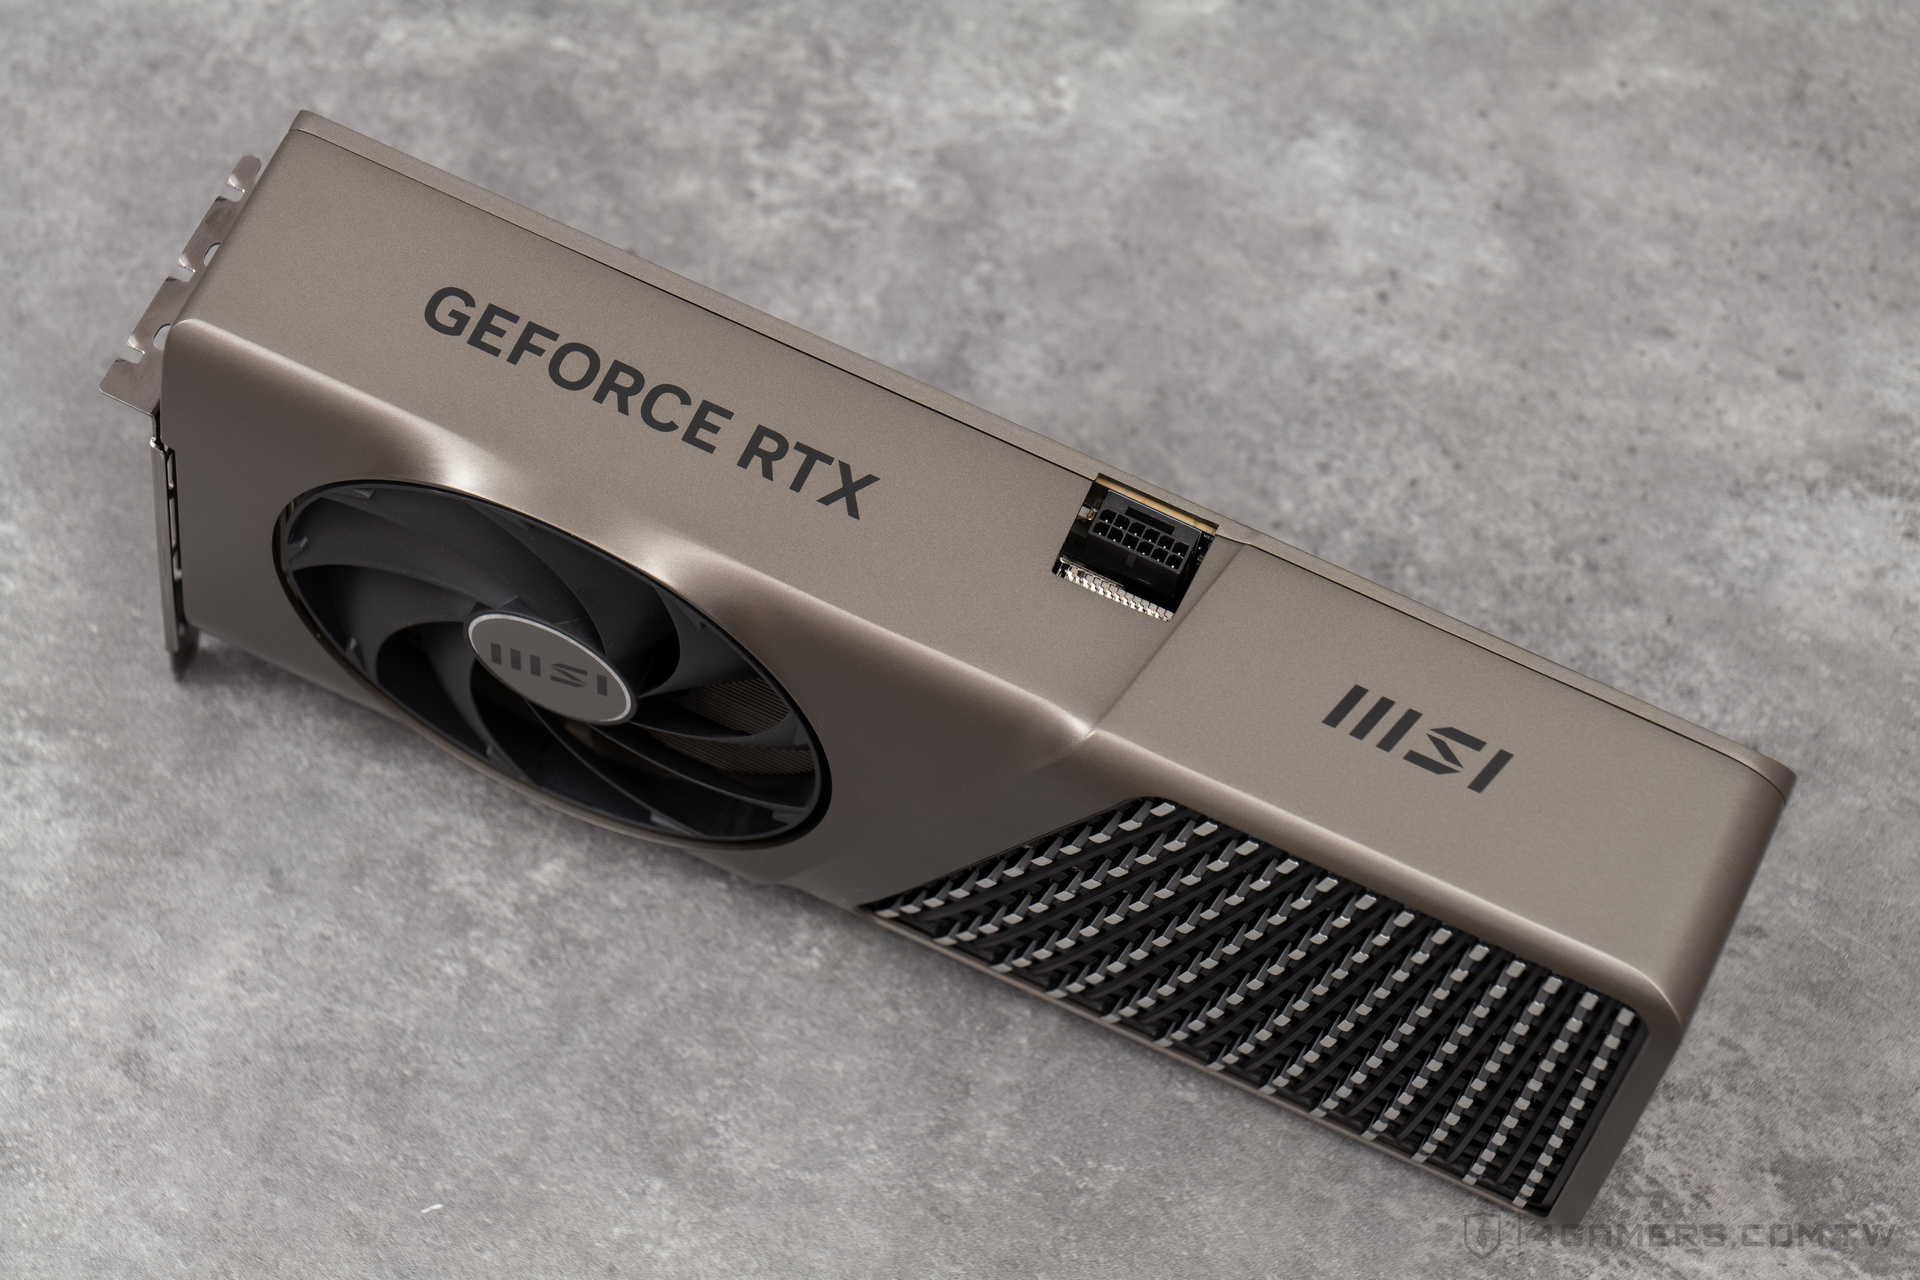 MSI GeForce RTX 4080 SUPER Expert